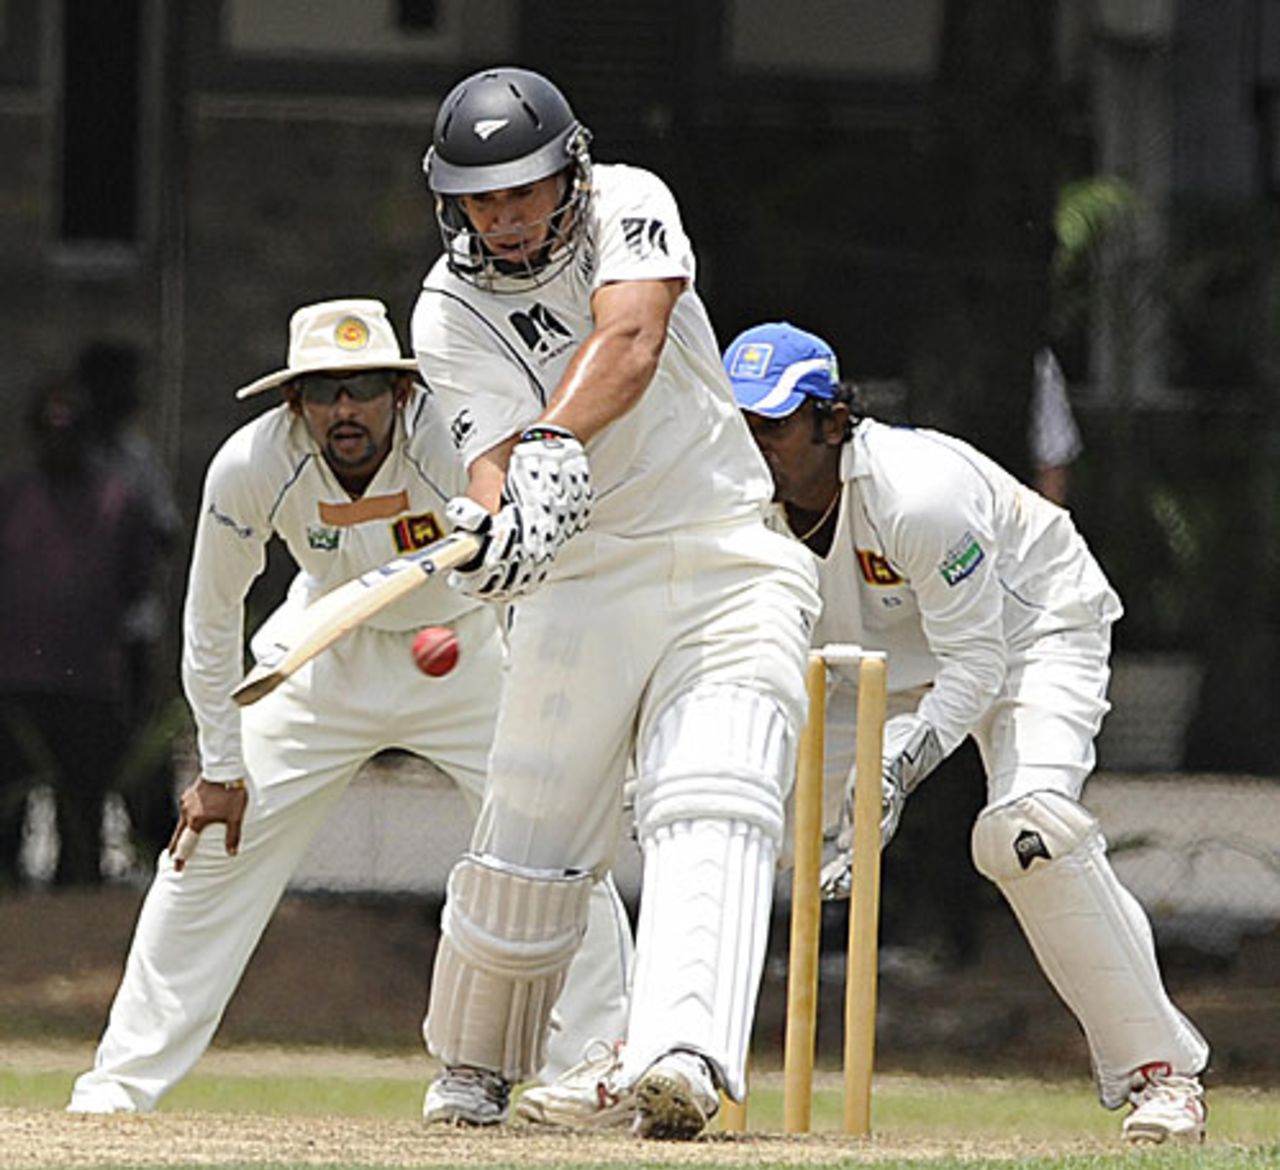 Ross Taylor plays his trademark pull to midwicket, Sri Lanka Cricket Development XI v New Zealanders, Day 1, Colombo (NCC), Aug 12, 2009 